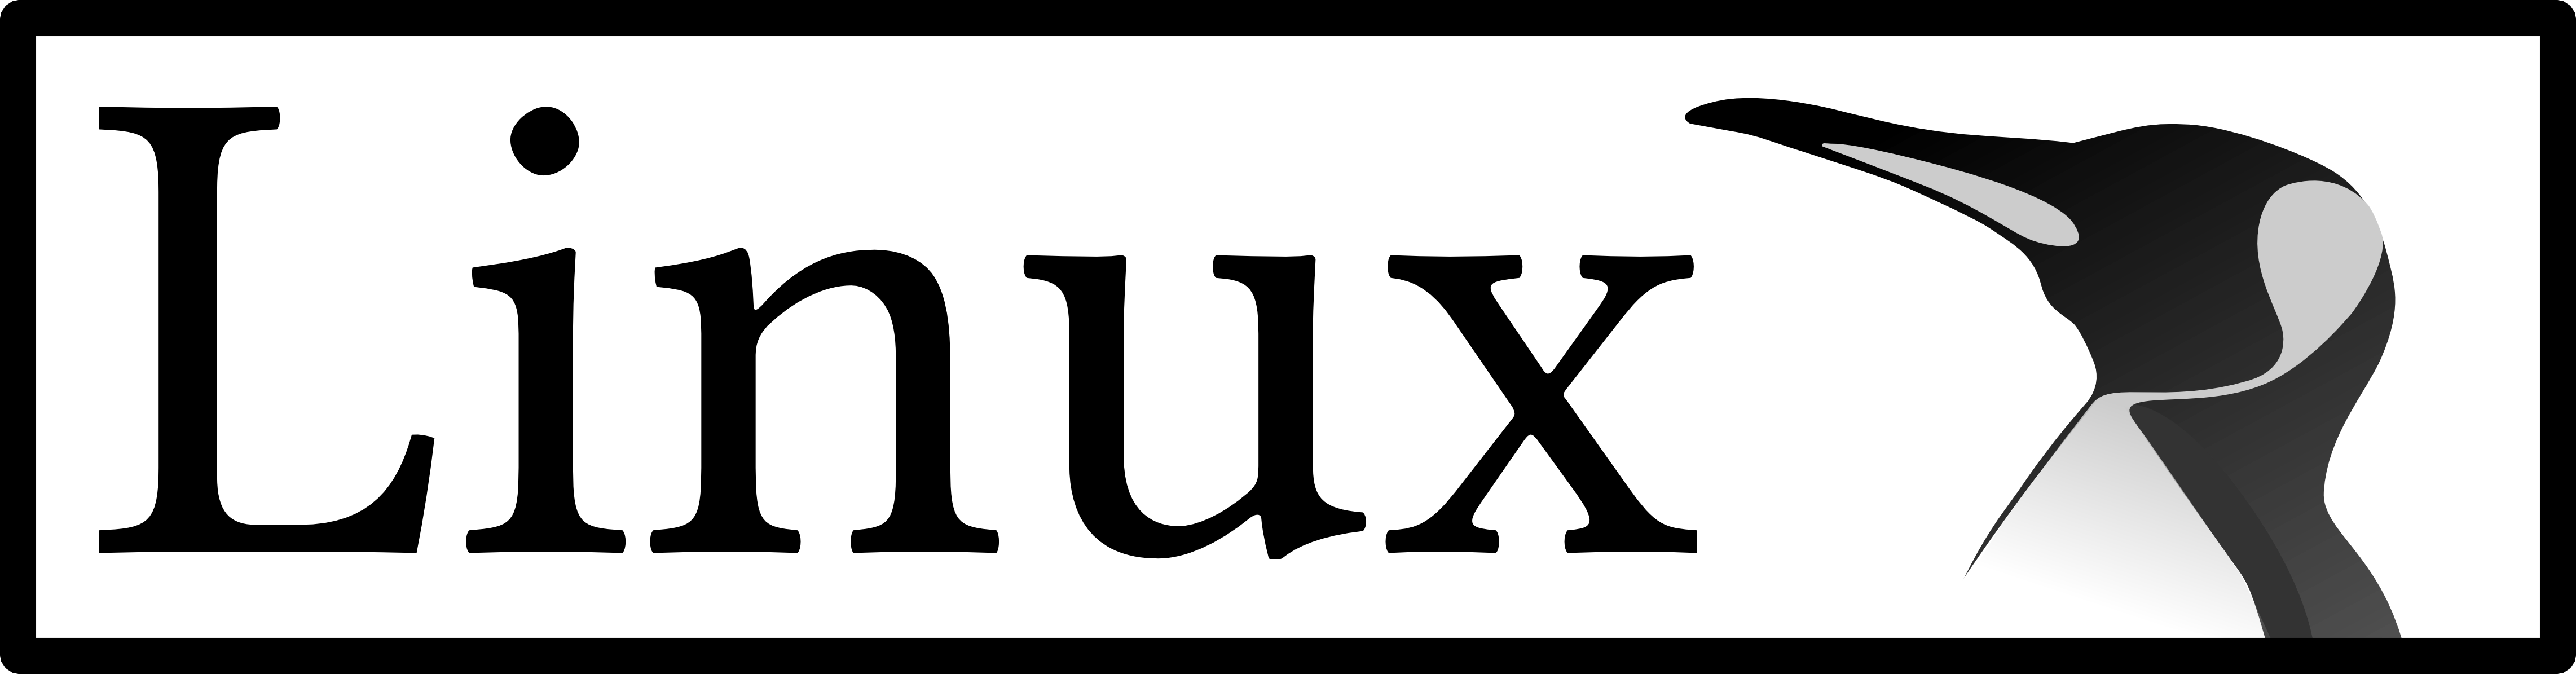 Linux Logo PNG Image